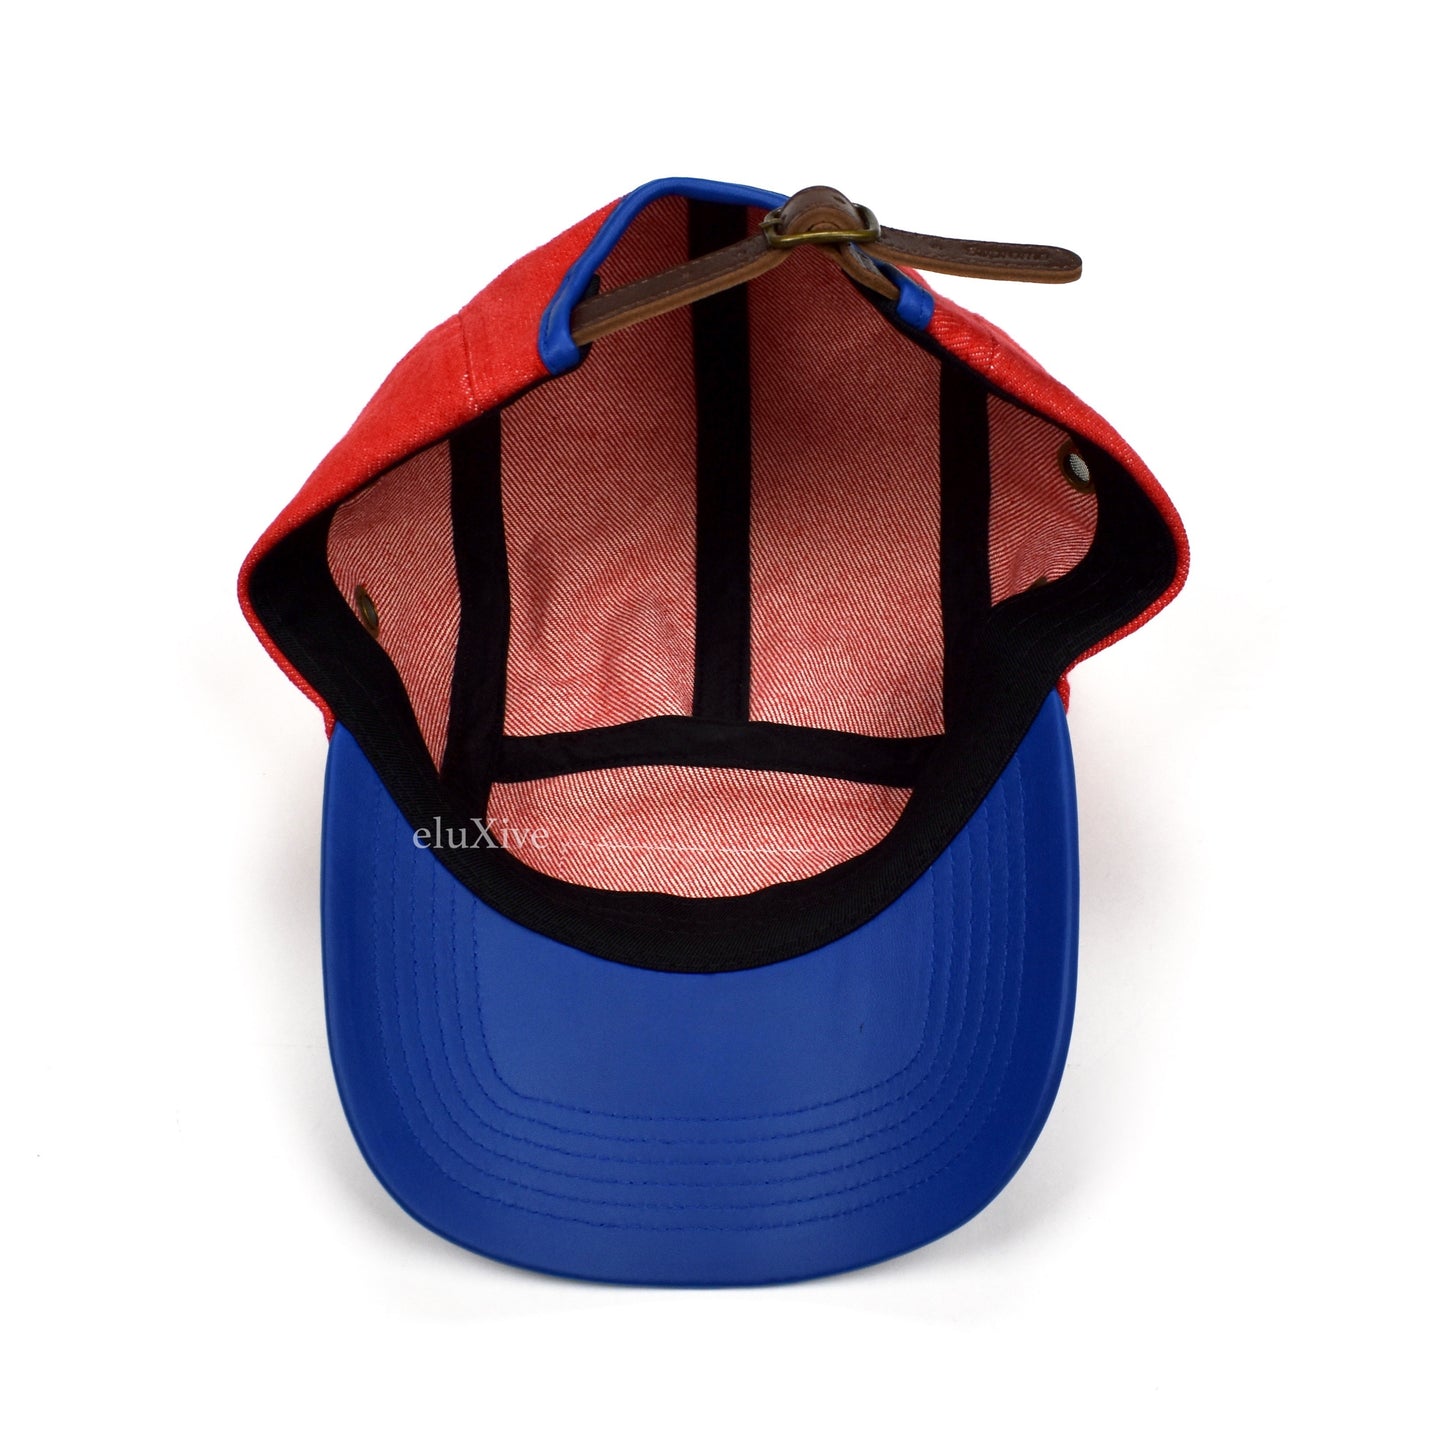 Supreme - 2-Tone Leather Brim Box Logo Hat (Red/Blue)